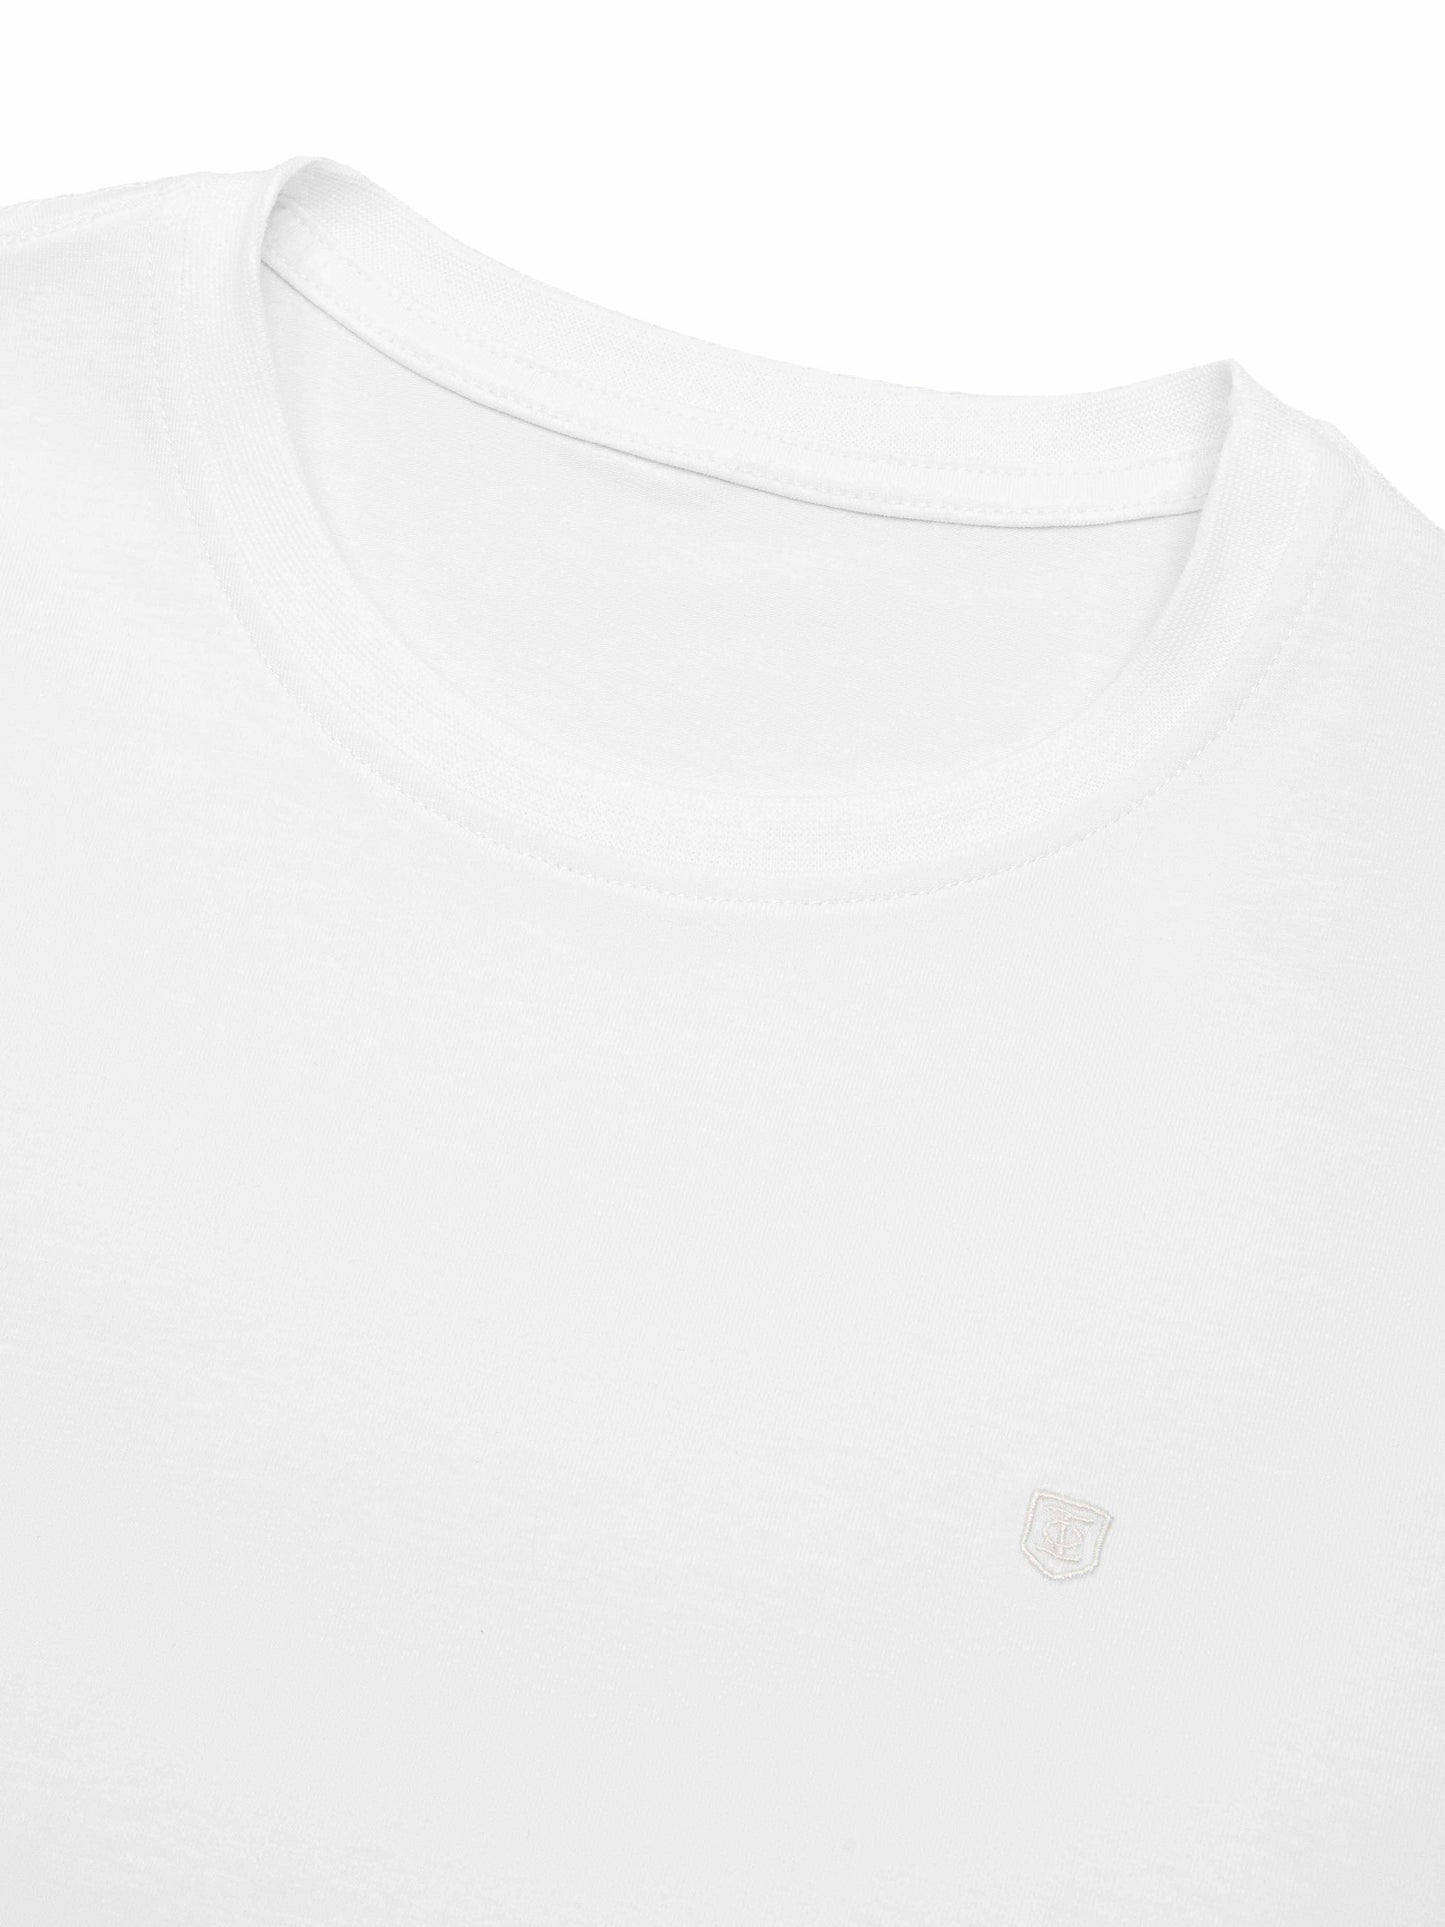 White T-shirt INDPOSHIV CASUAL